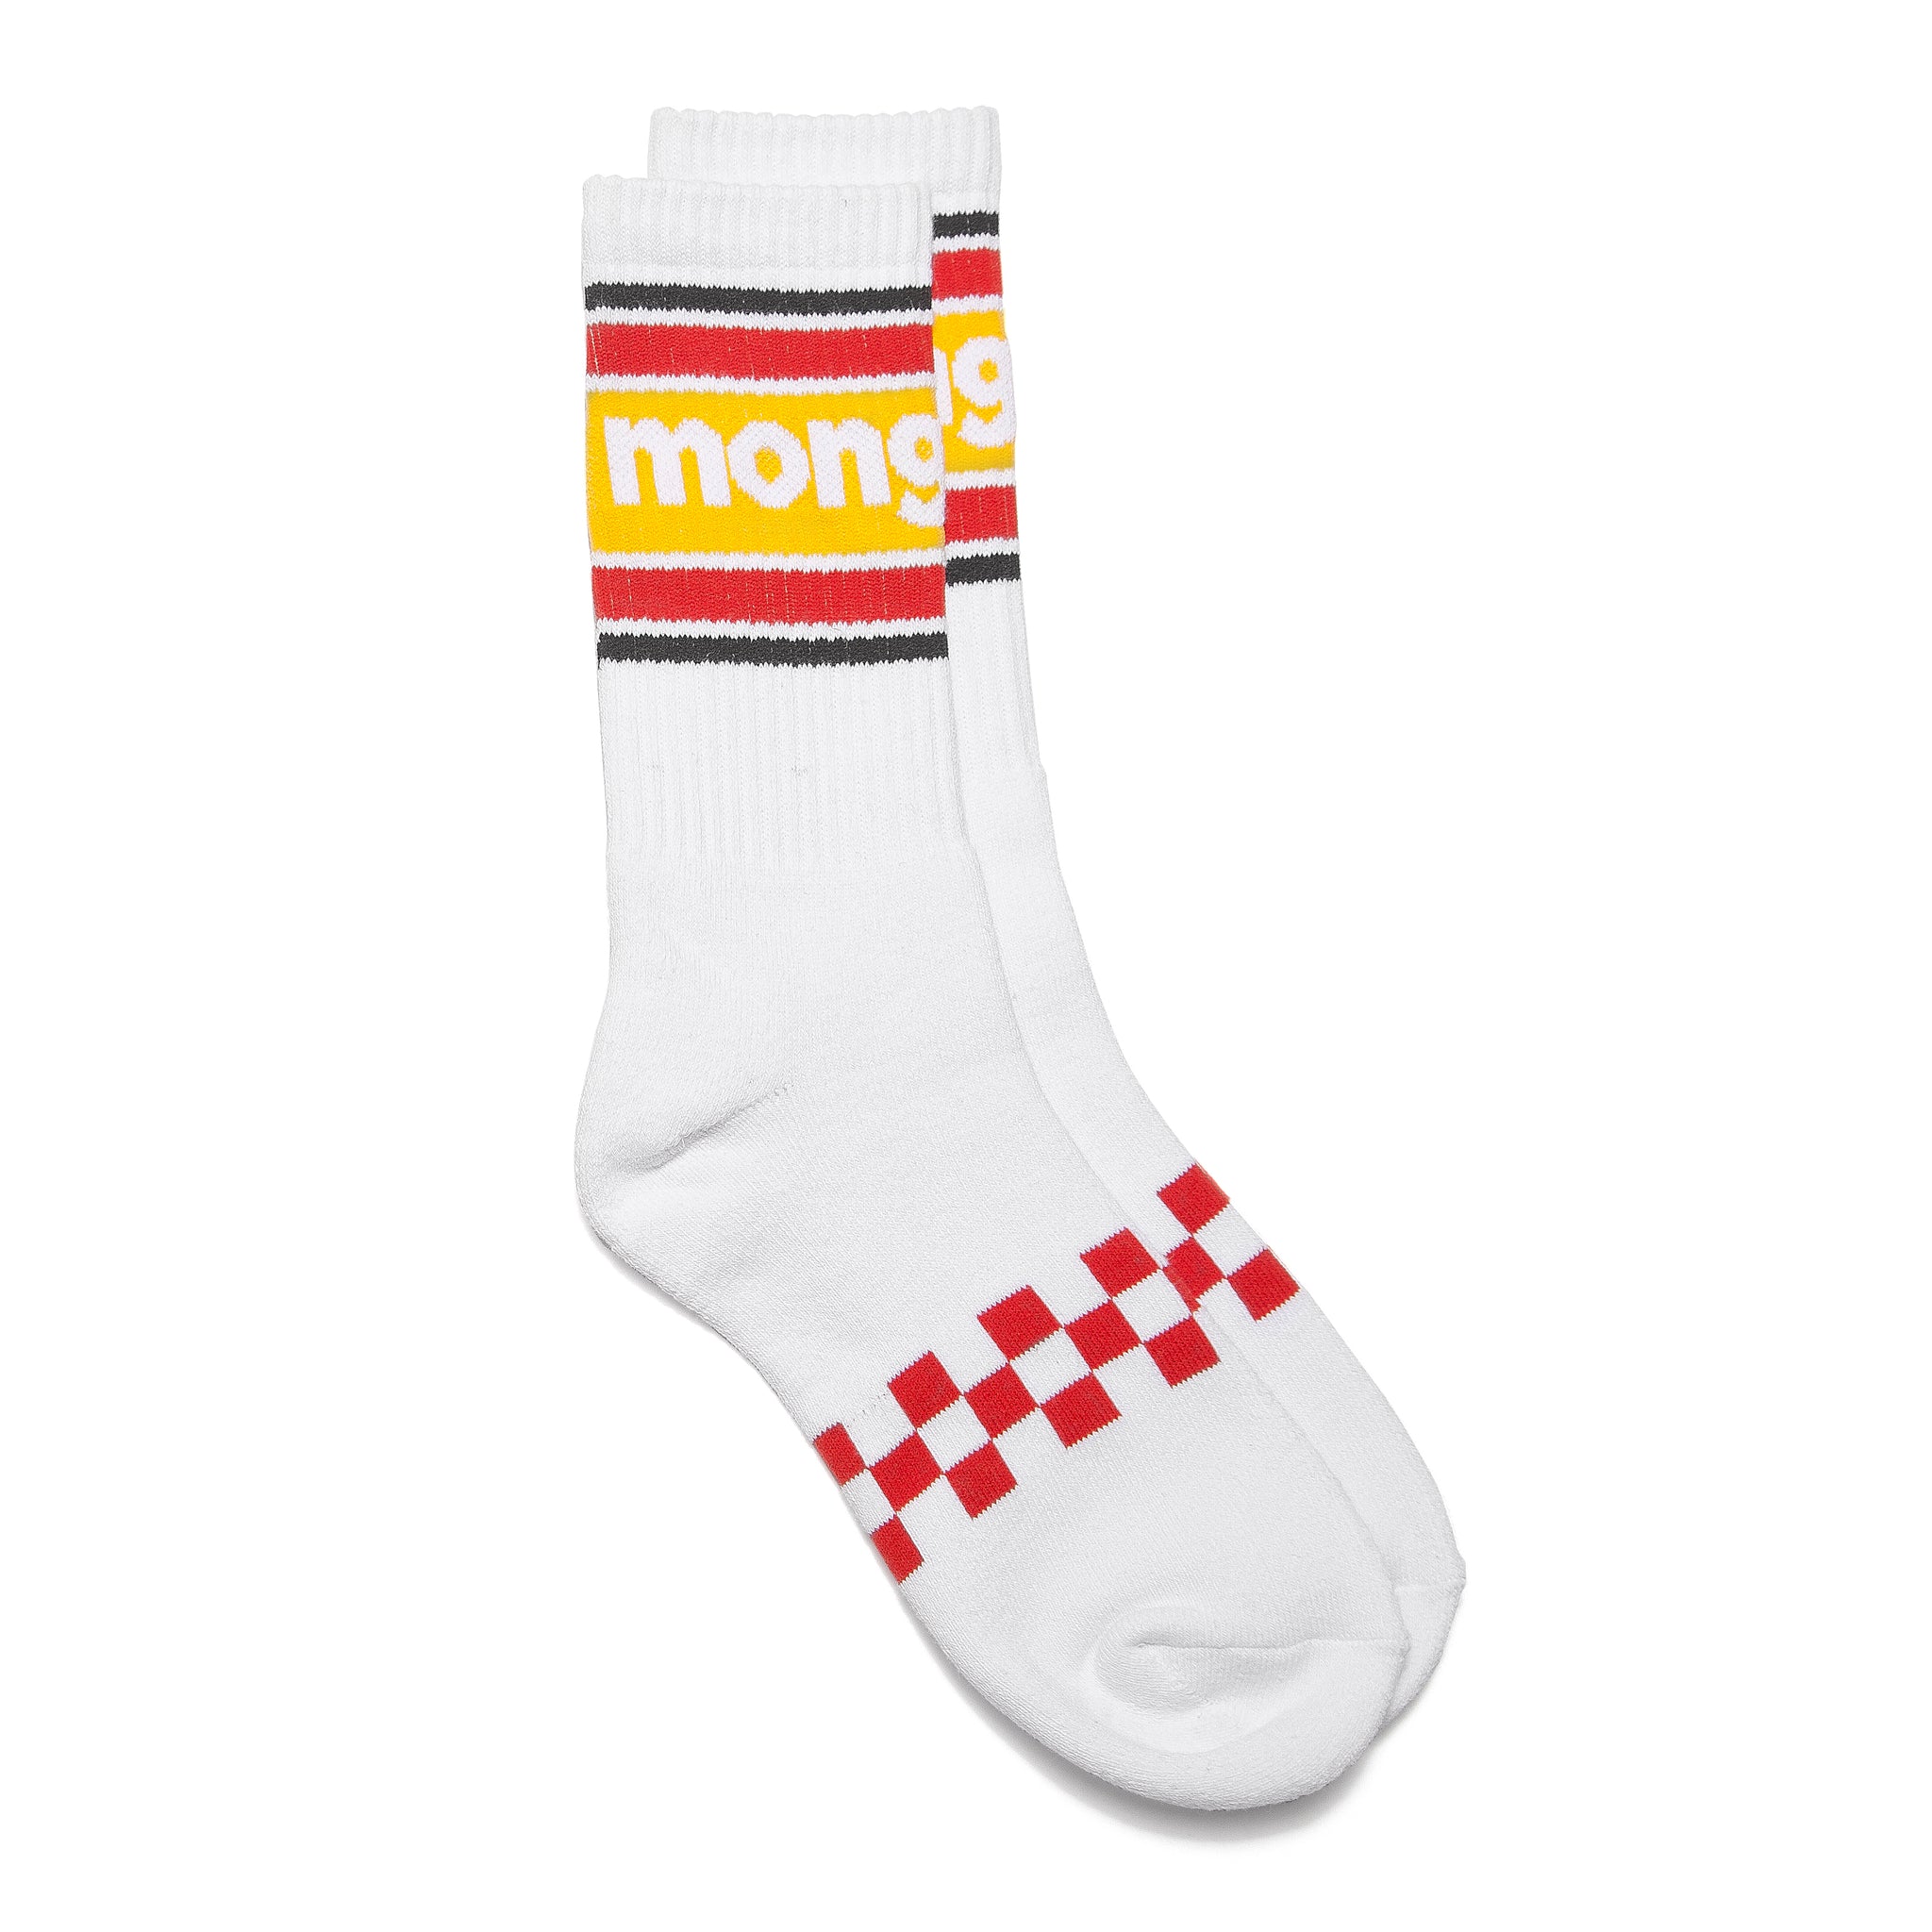 Mongoose Checkerboard Sock - White